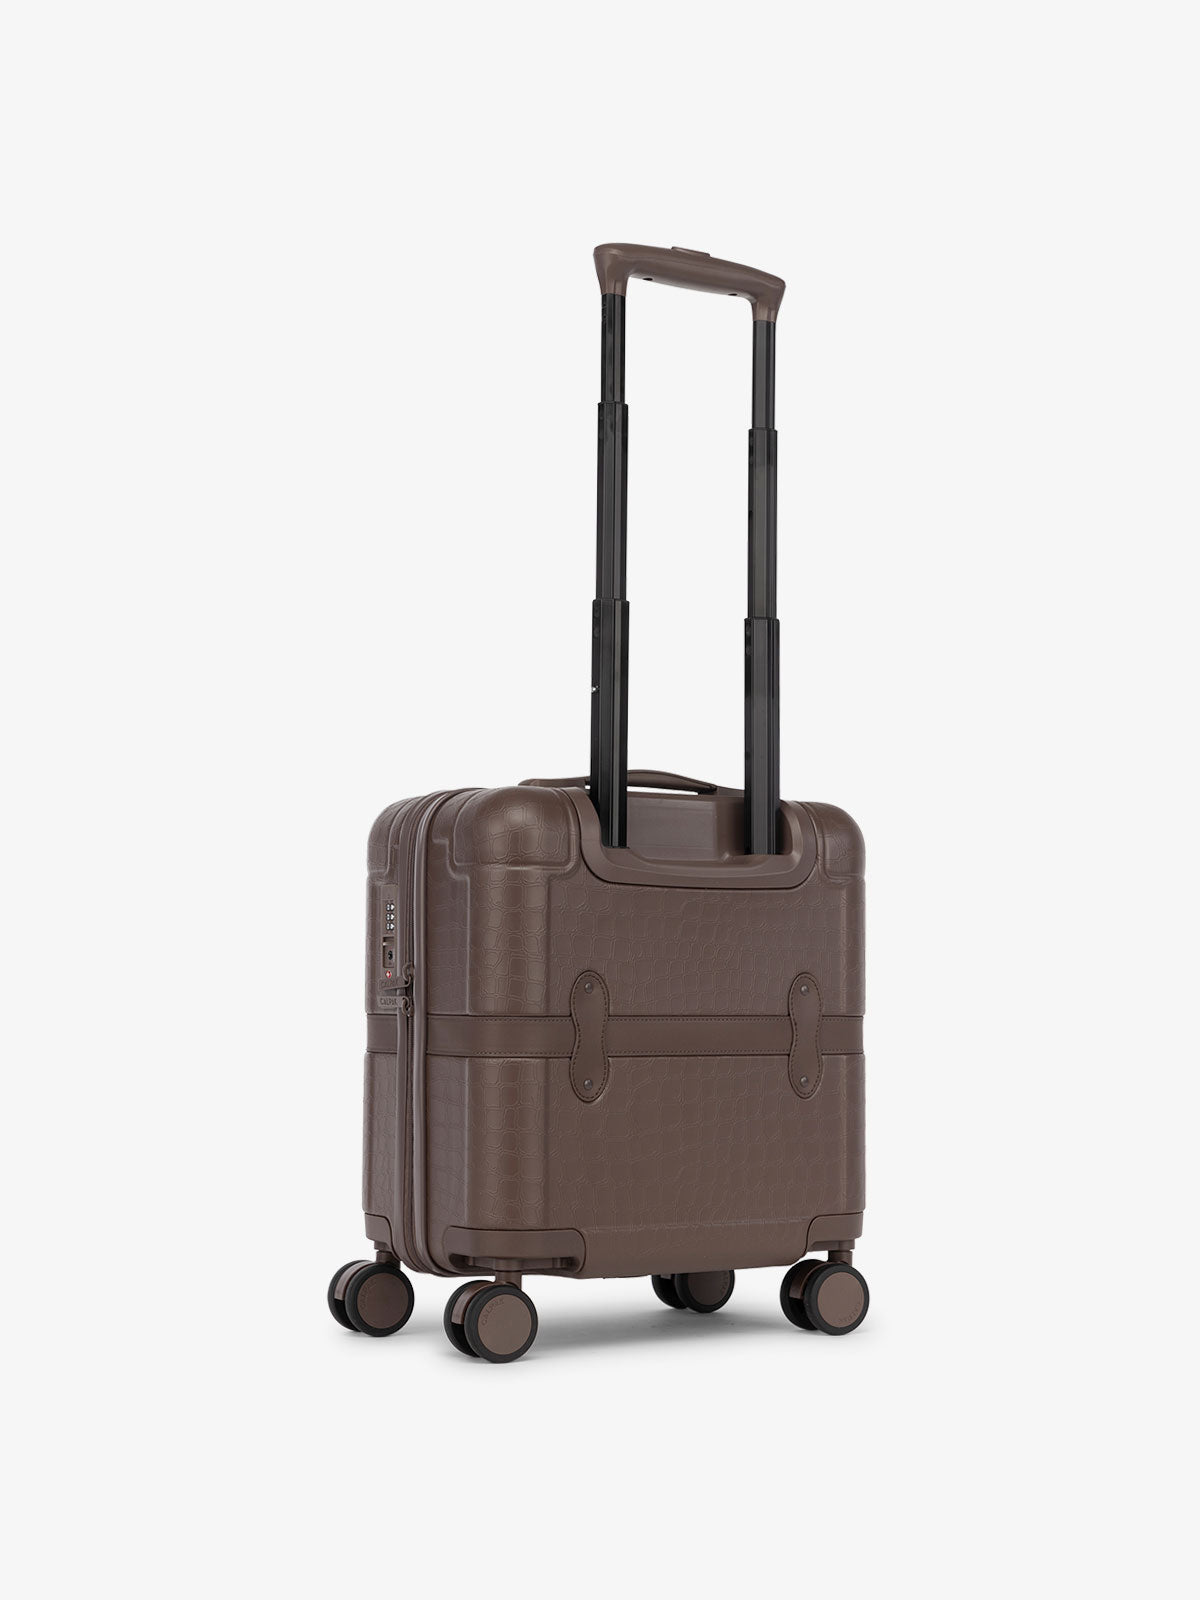 Trnk Mini Carry-On Luggage | CALPAK